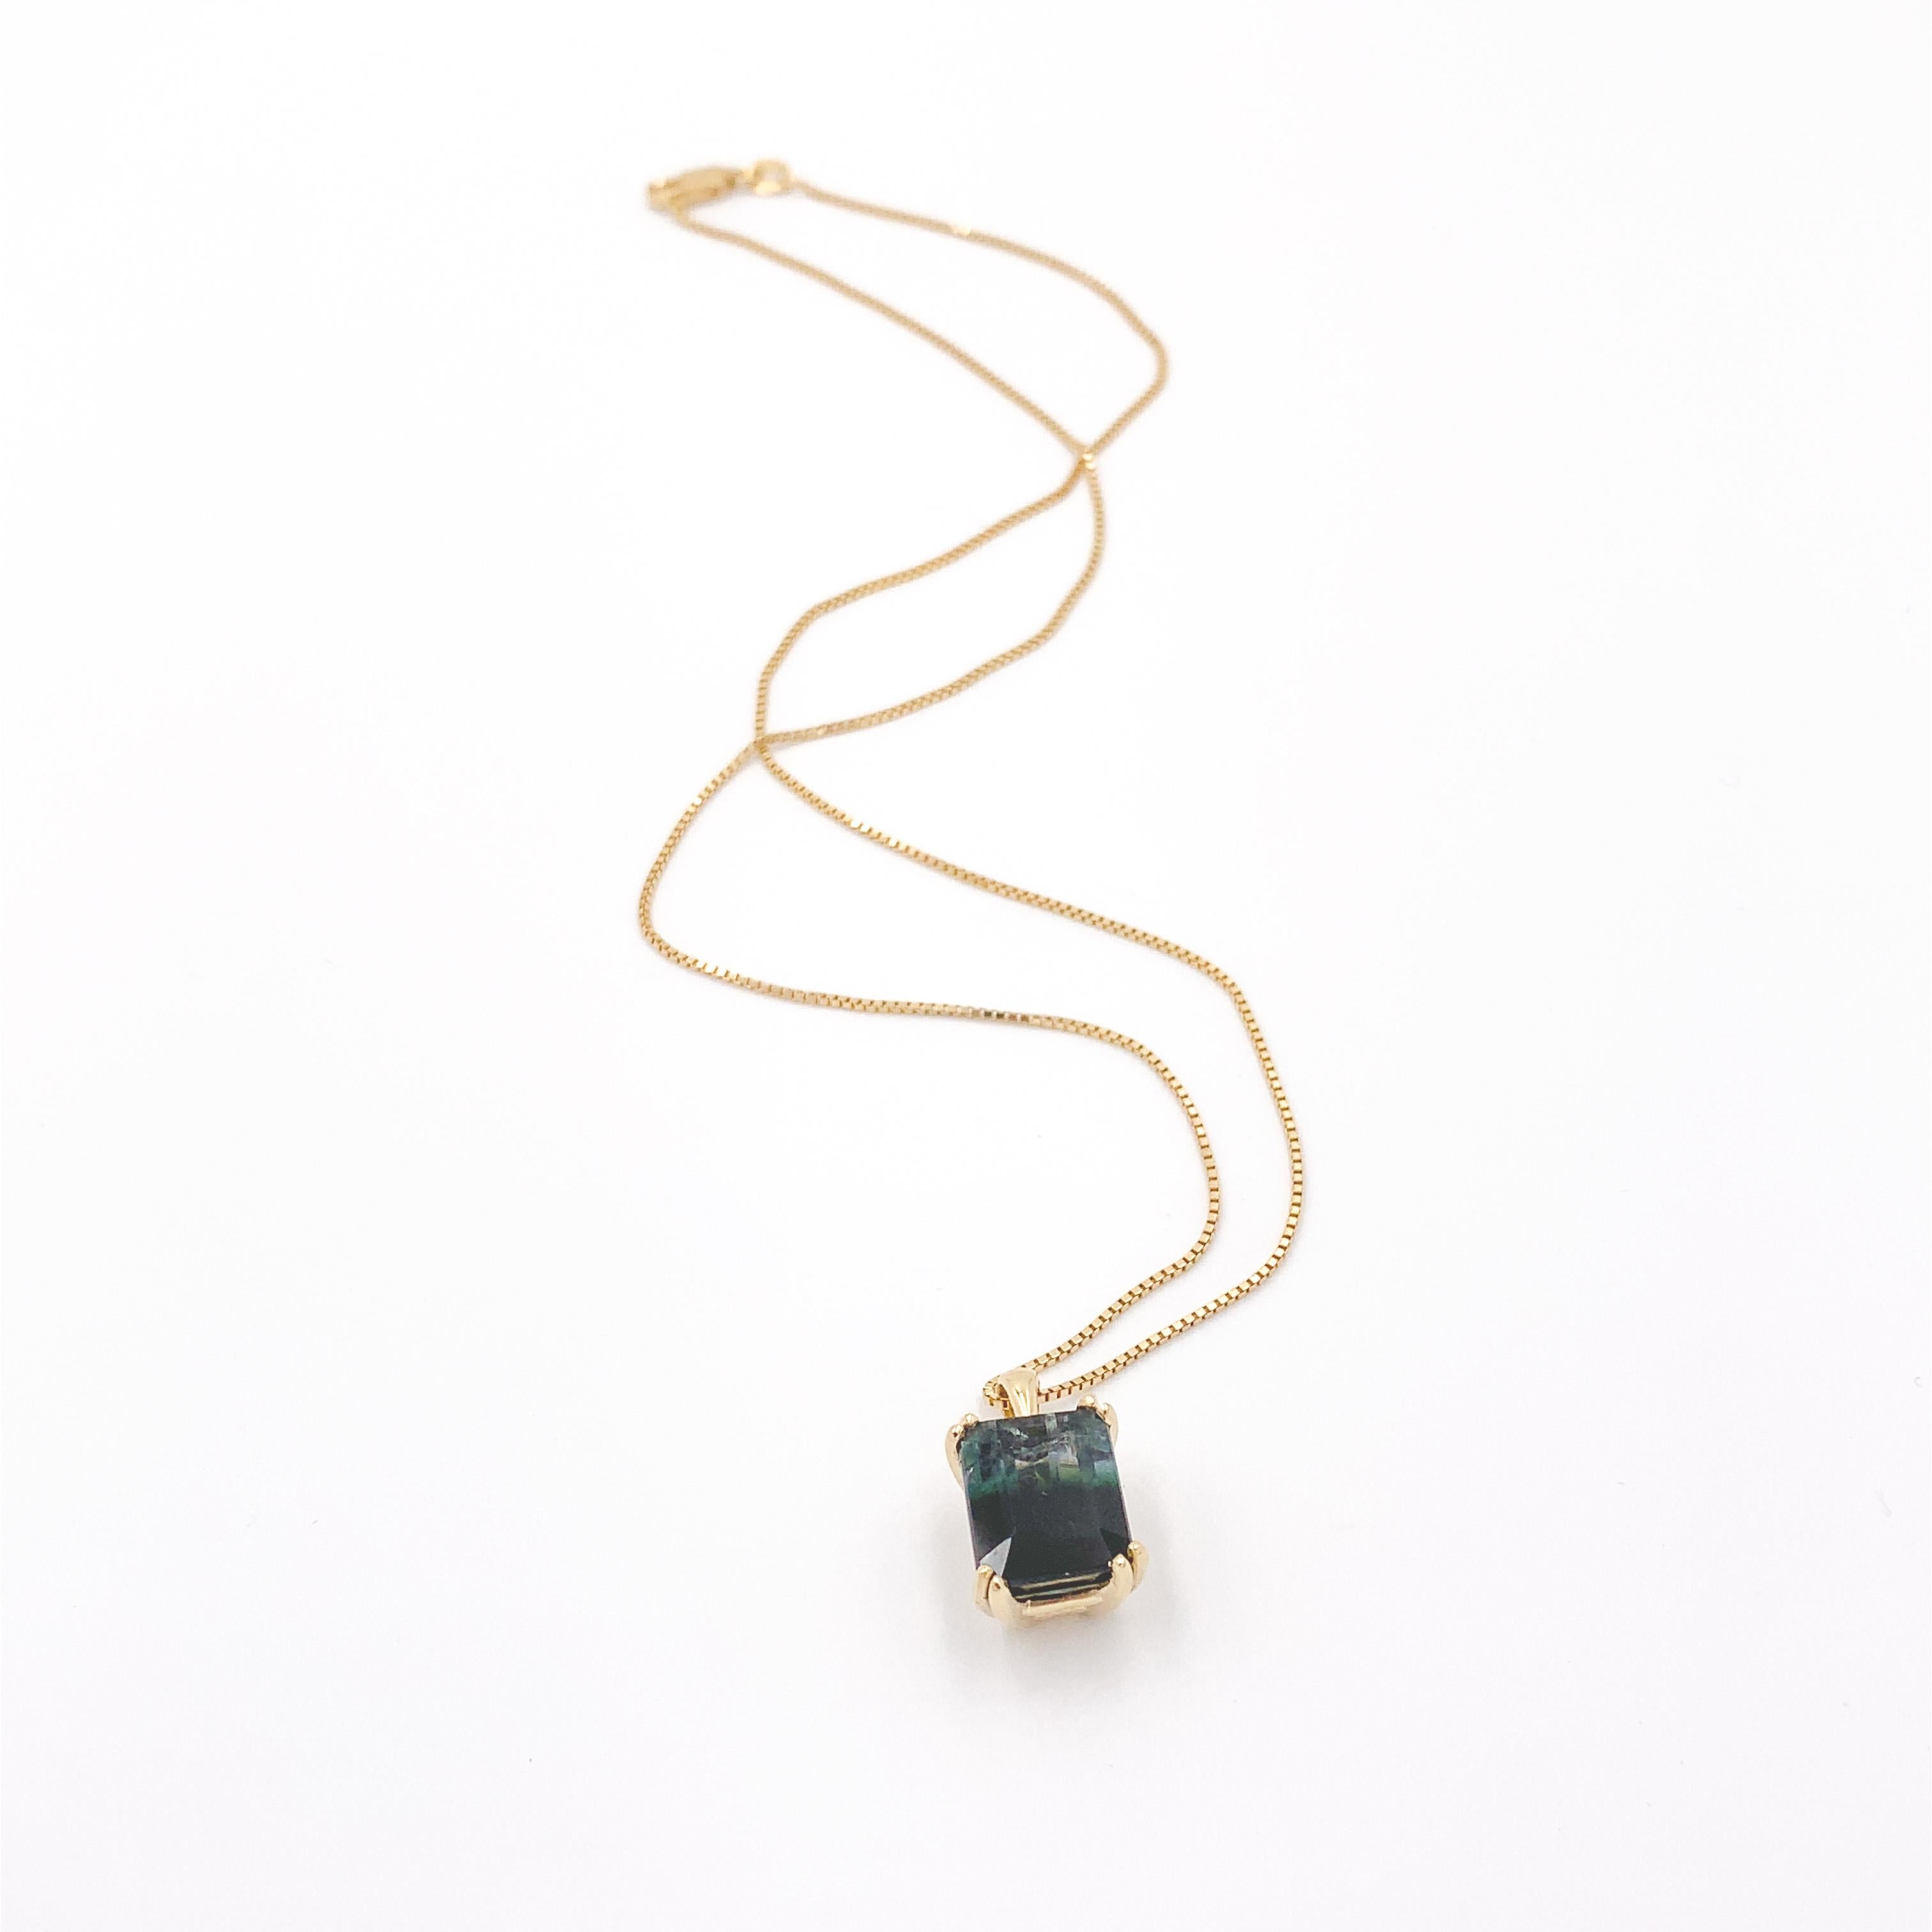 Emerald Cut 14K Yellow Gold 7.92 carat Bi-Color Tourmaline Pendant with chain For Sale